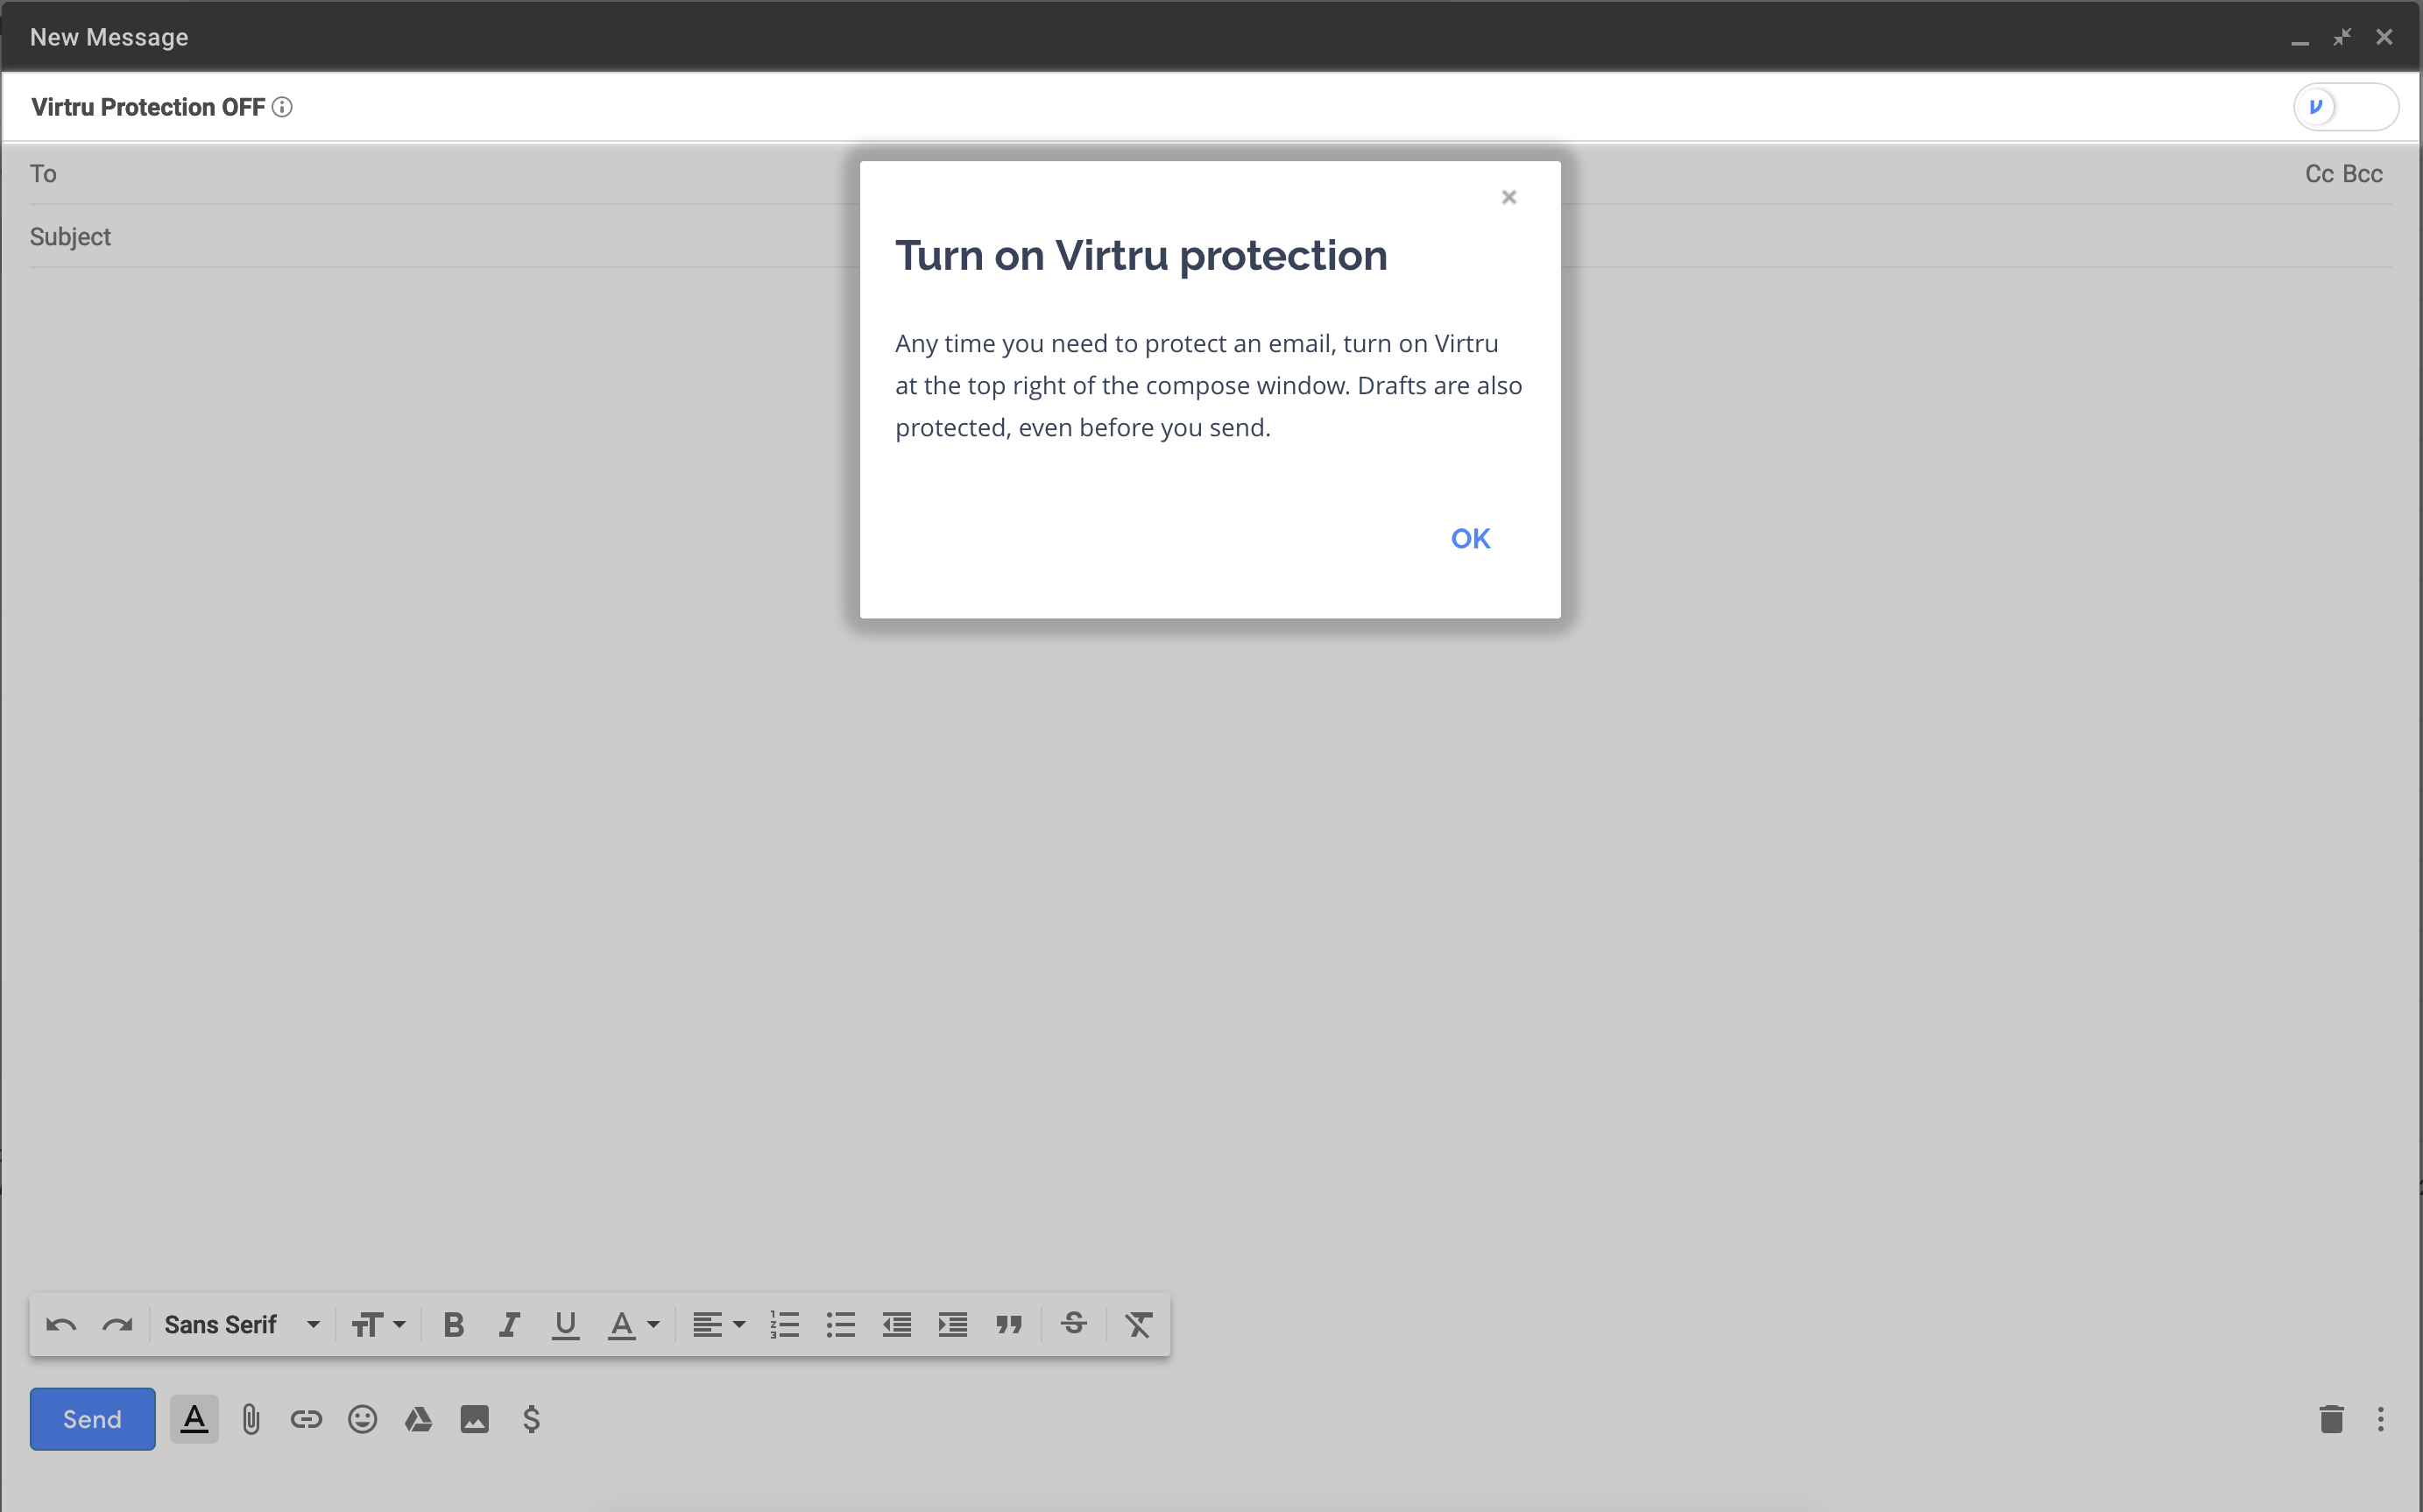 Compose window prompting user to toggle Virtru on